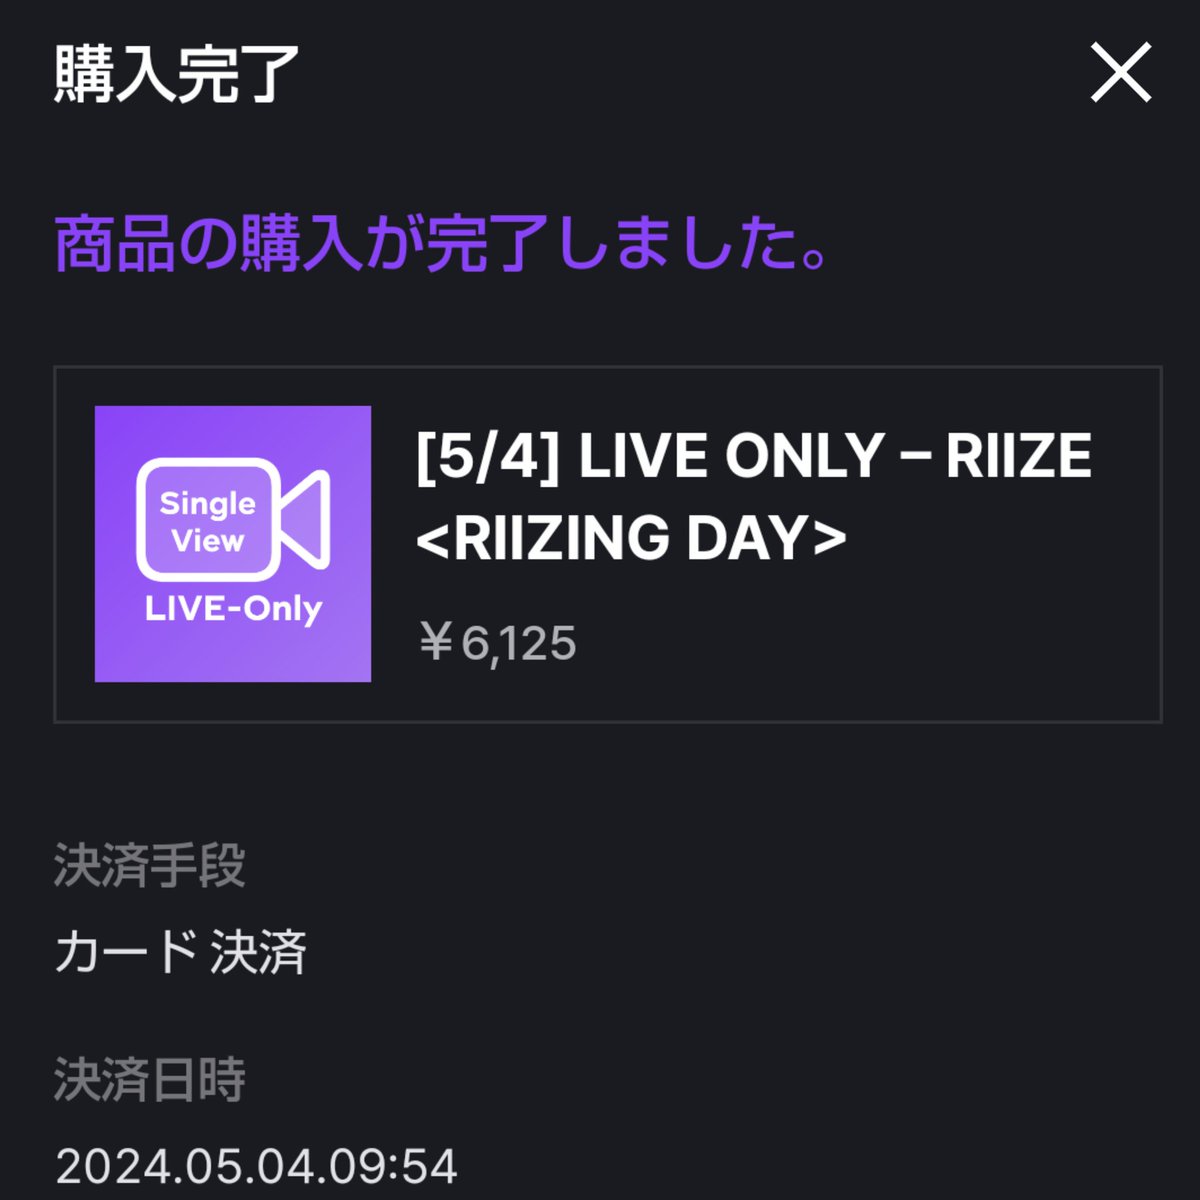 RIIZEファンコンin SEOUL🎶 Beyond LIVE5/4分を購入しました🤩明日5日はKNTVで見ます📺️(録画してBlu-ray💿️でダビング)スマホからリビングのテレビに反映して見るので、夕方の視聴を家族の許可を得ました😂やっぱり大画面で見たいよね☺️ #RIIZE #ファンコン #ソウル #BeyondLIVE